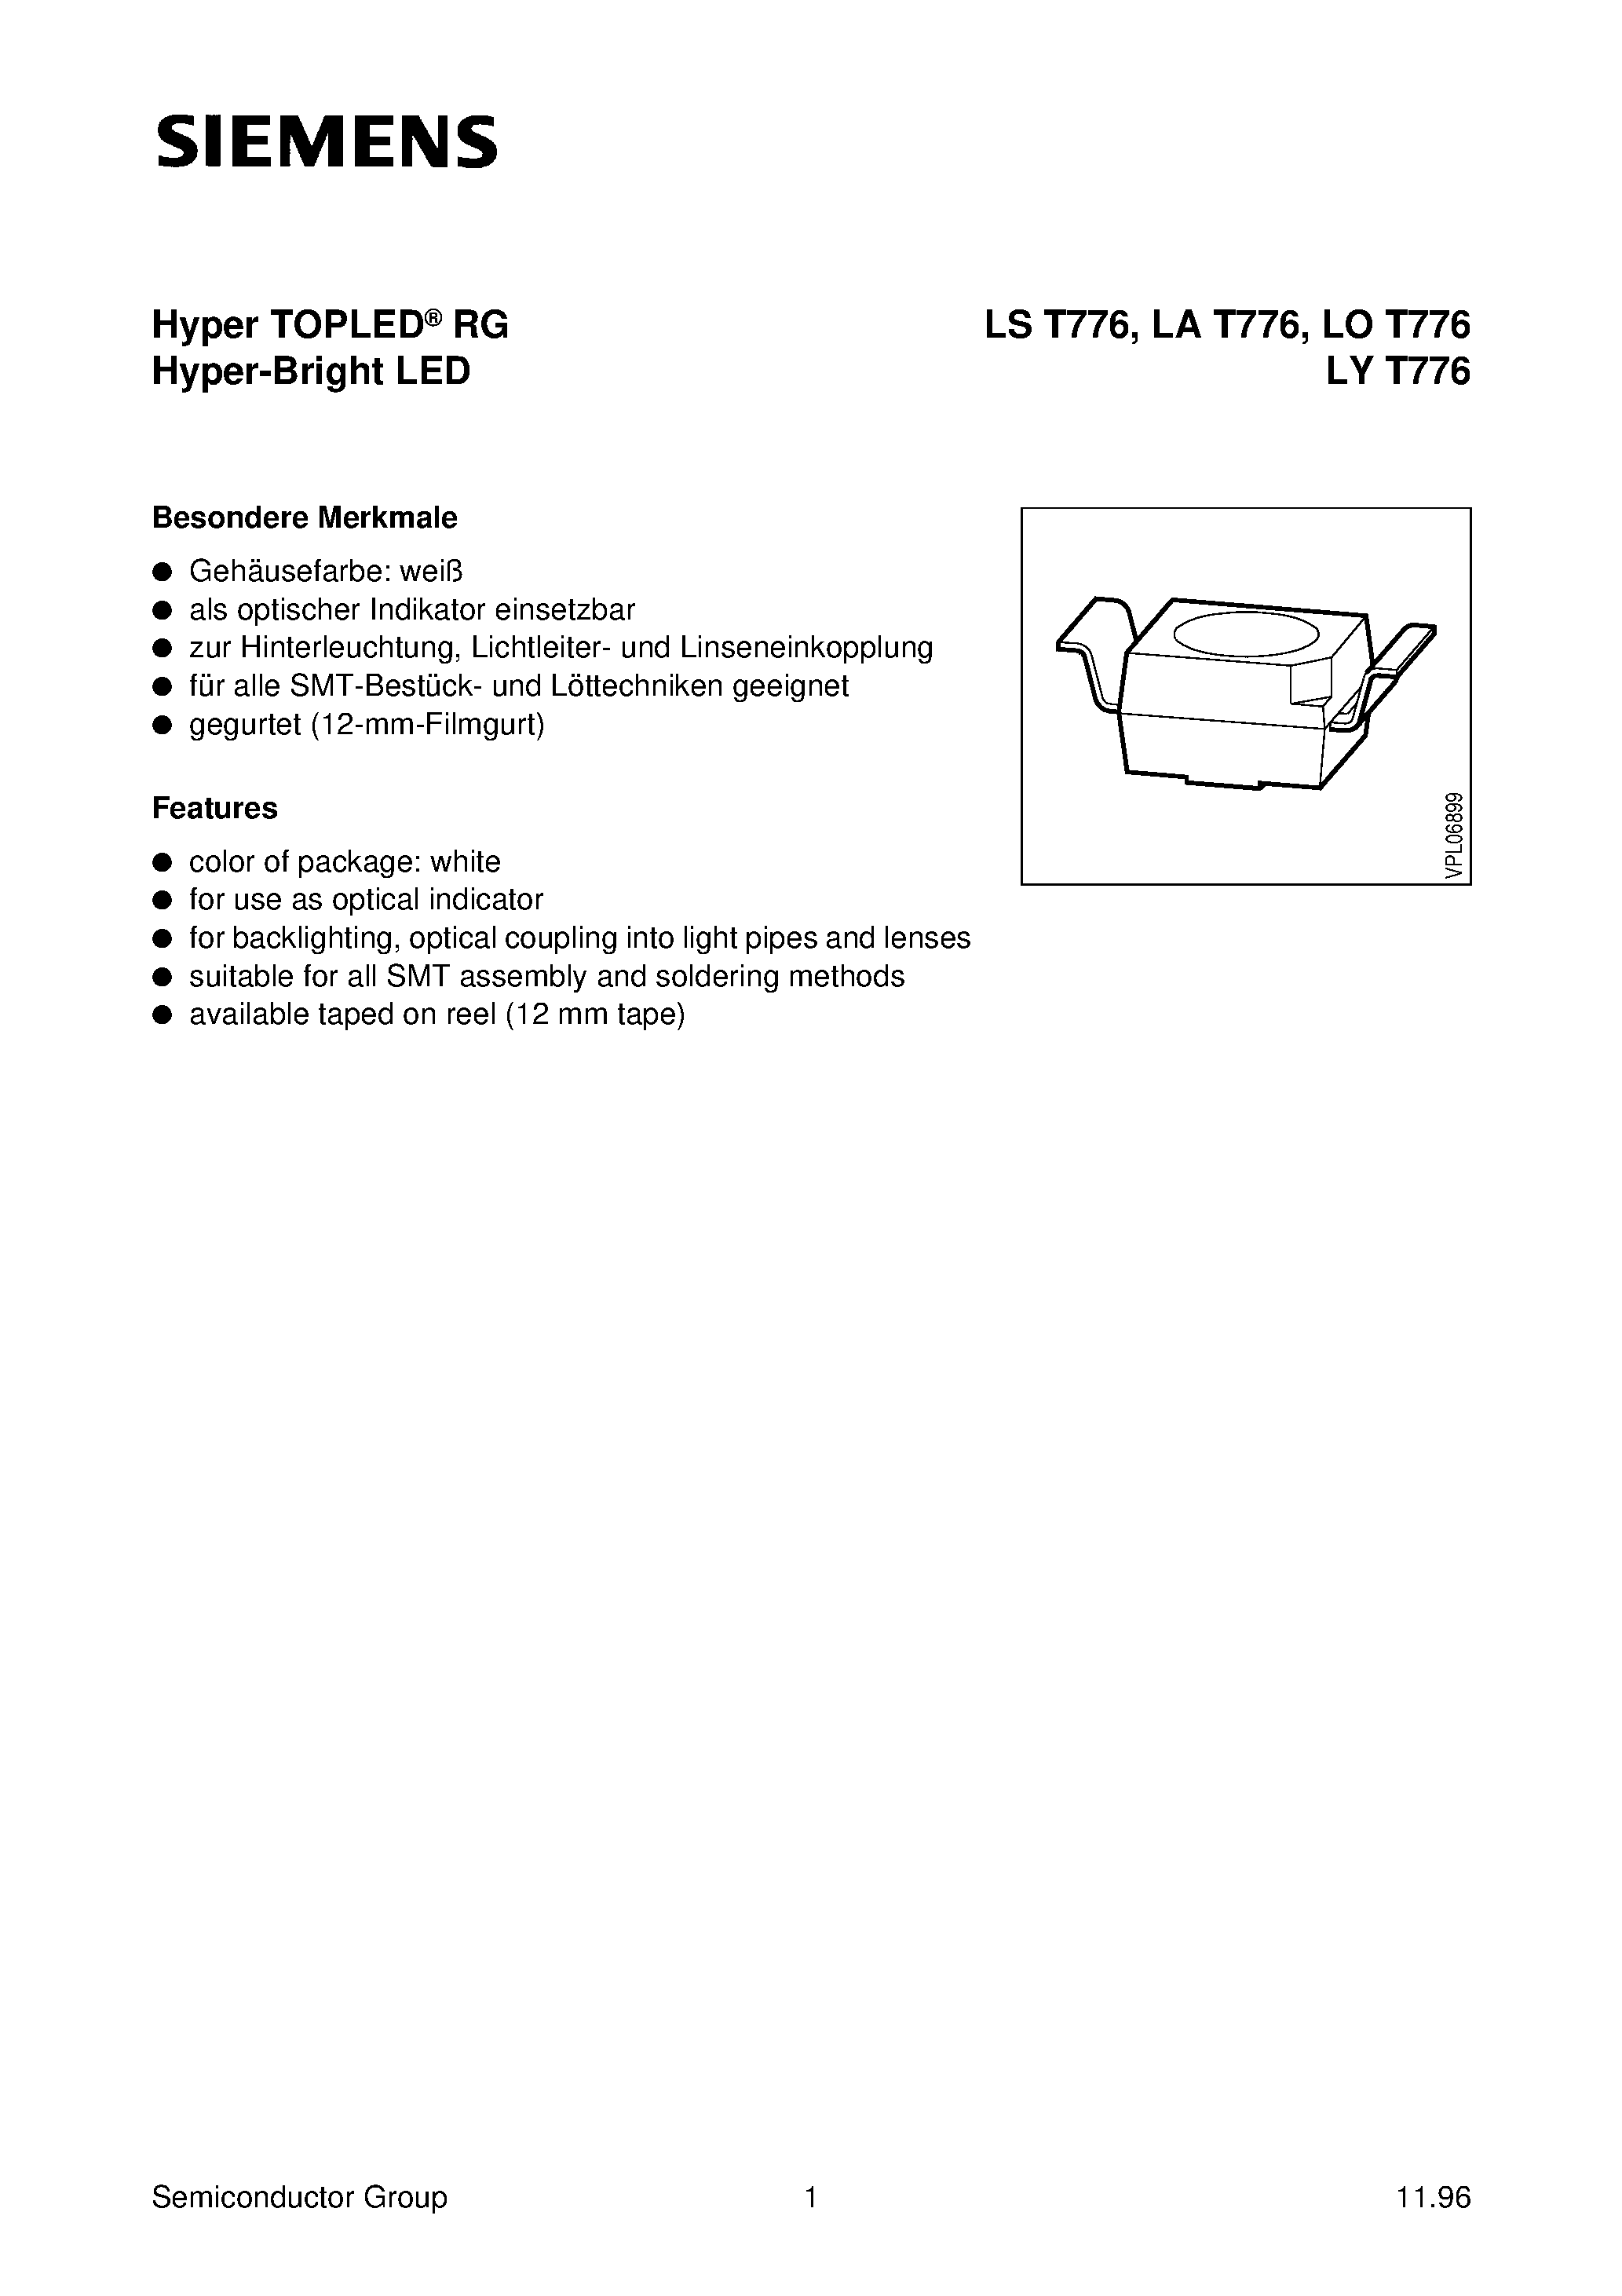 Datasheet LYT776-Q - Hyper TOPLED RG Hyper-Bright LED page 1